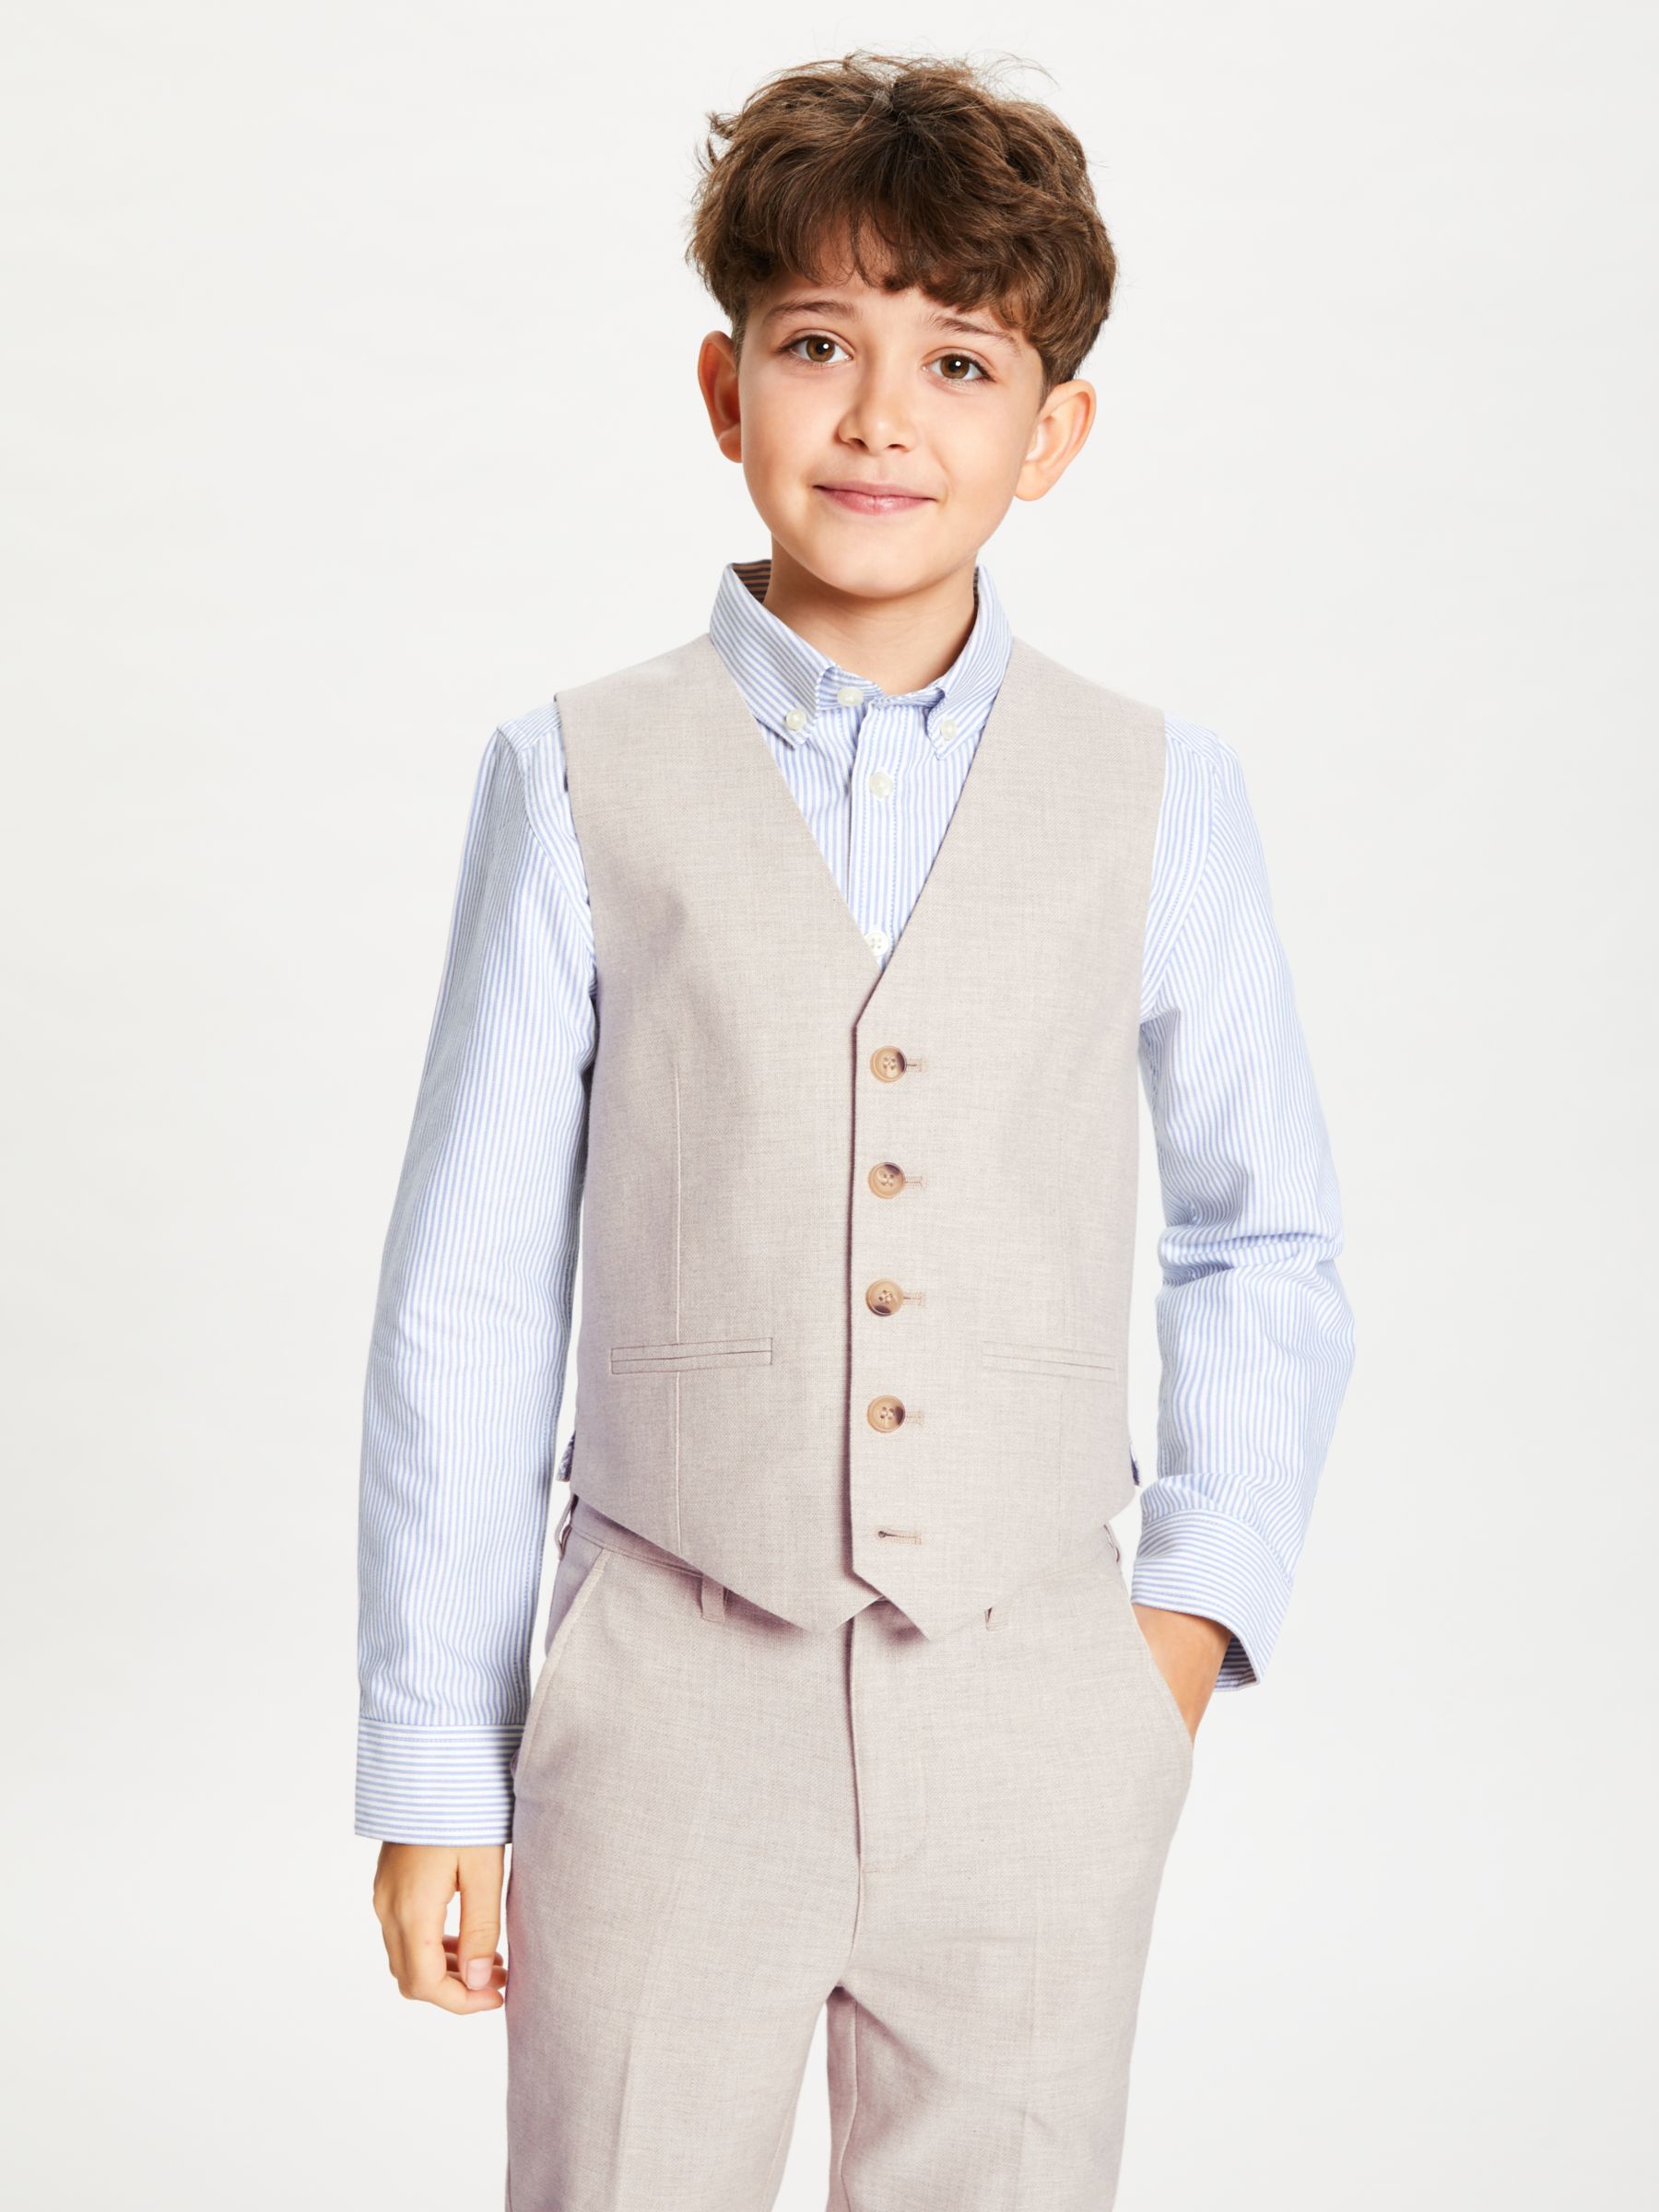 John Lewis Heirloom Collection Boys Waistcoat Bow Tie Shirt Set Black/White Age5